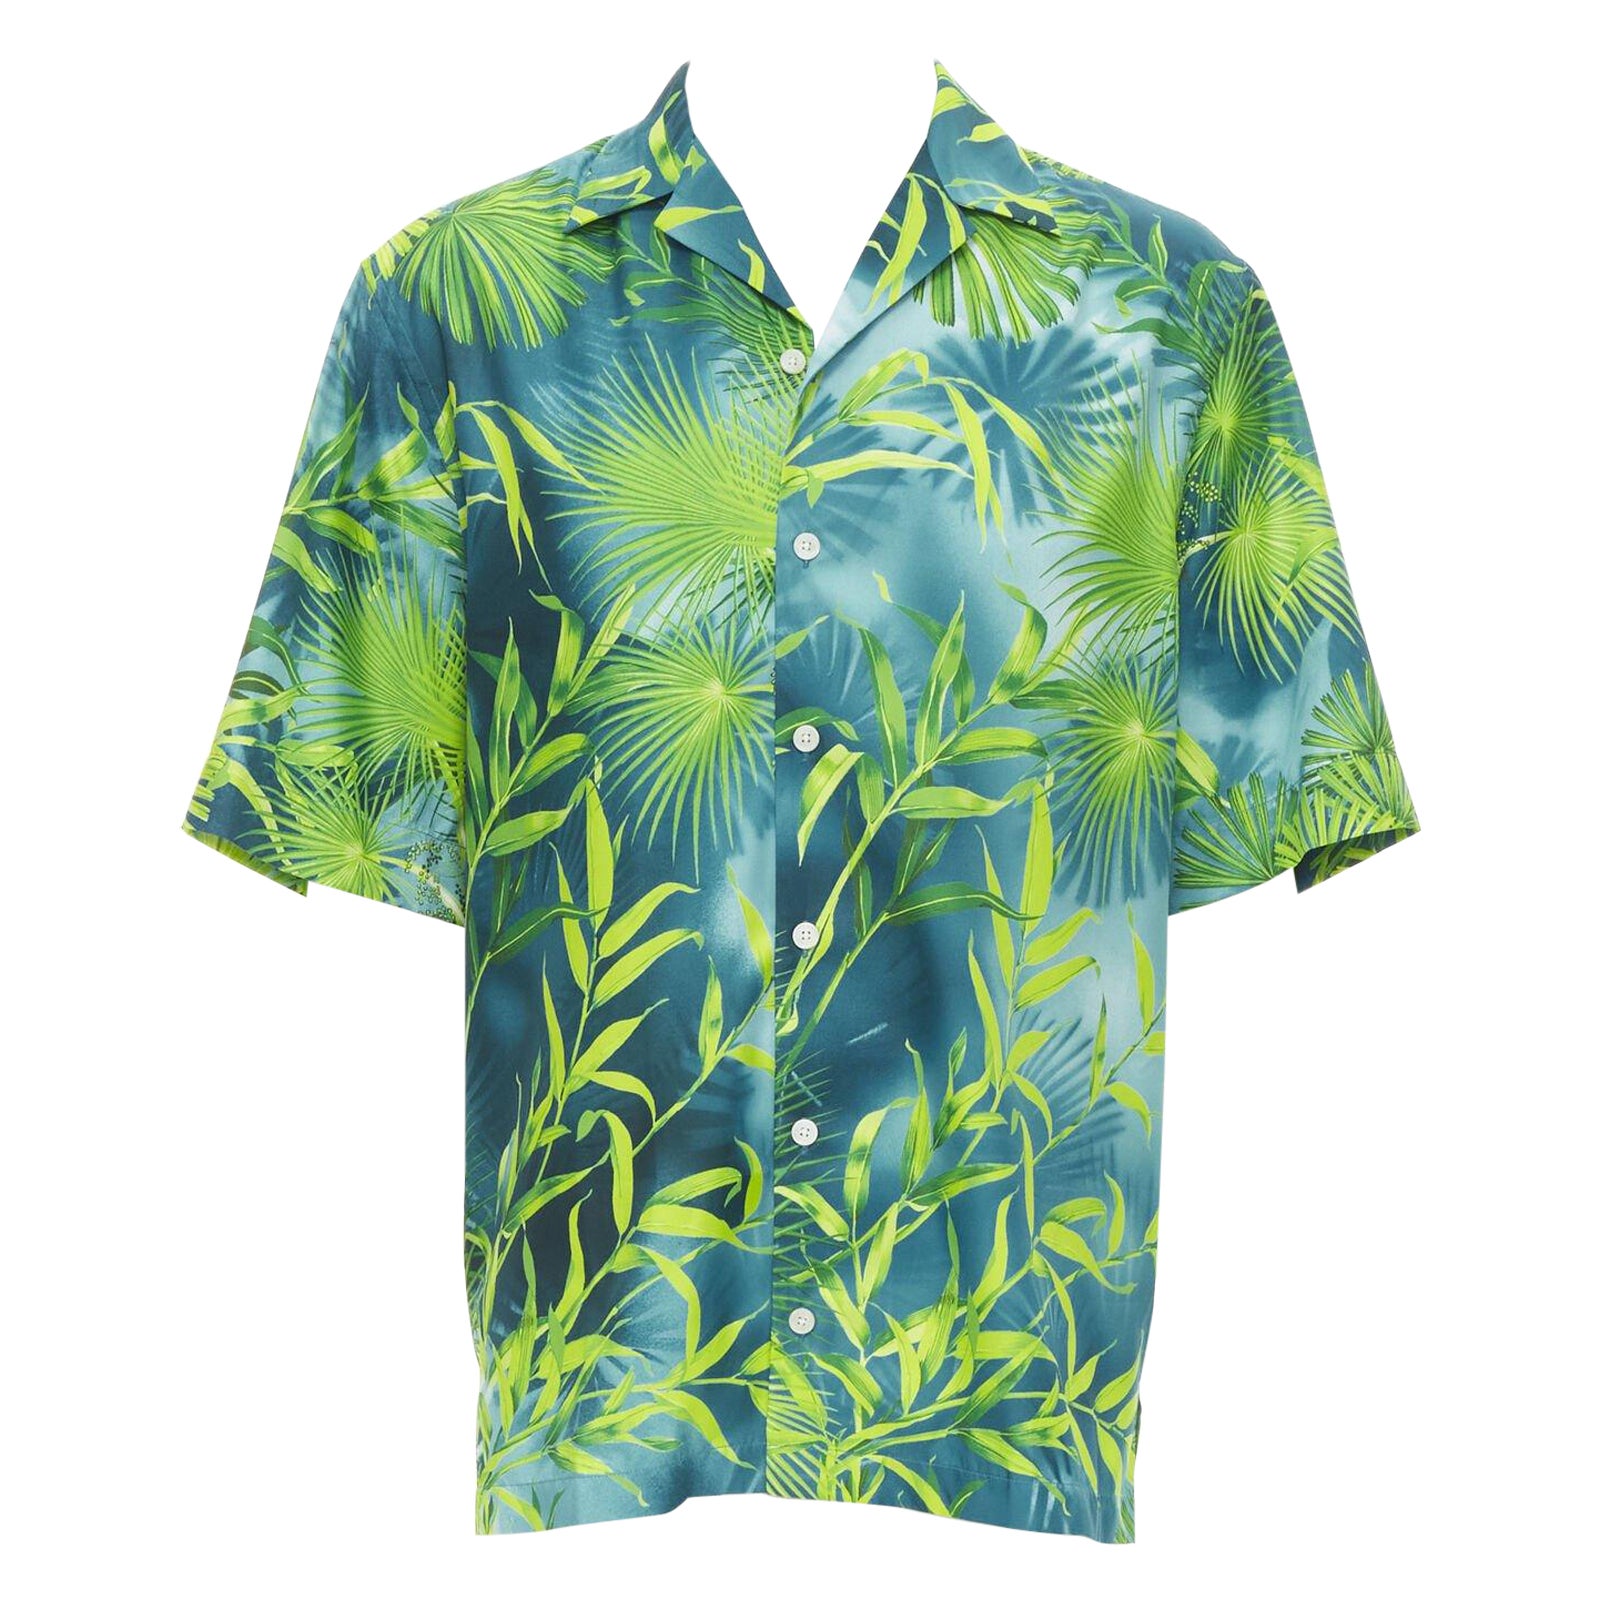 VERSACE 2020 Iconic JLo Jungle print green tropical print shirt EU41 XL For Sale